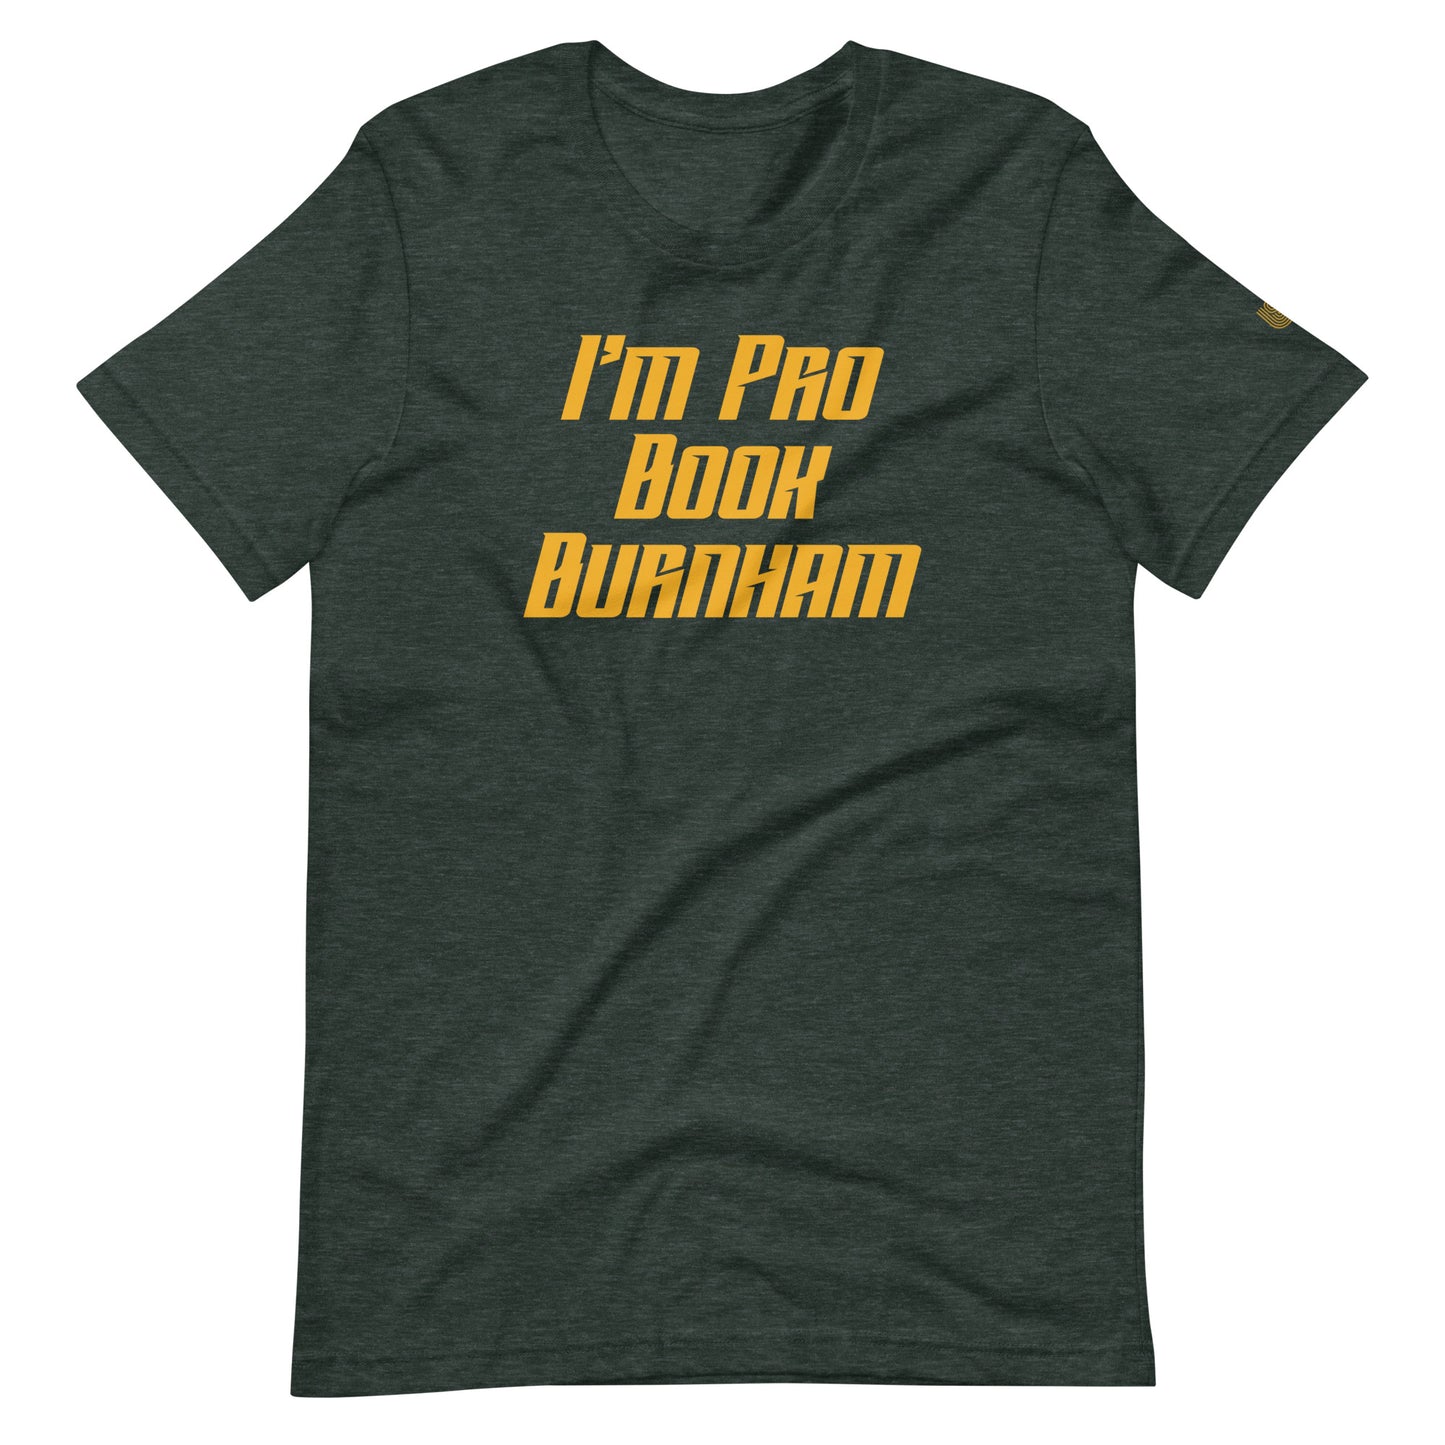 Book Burnham T-Shirt